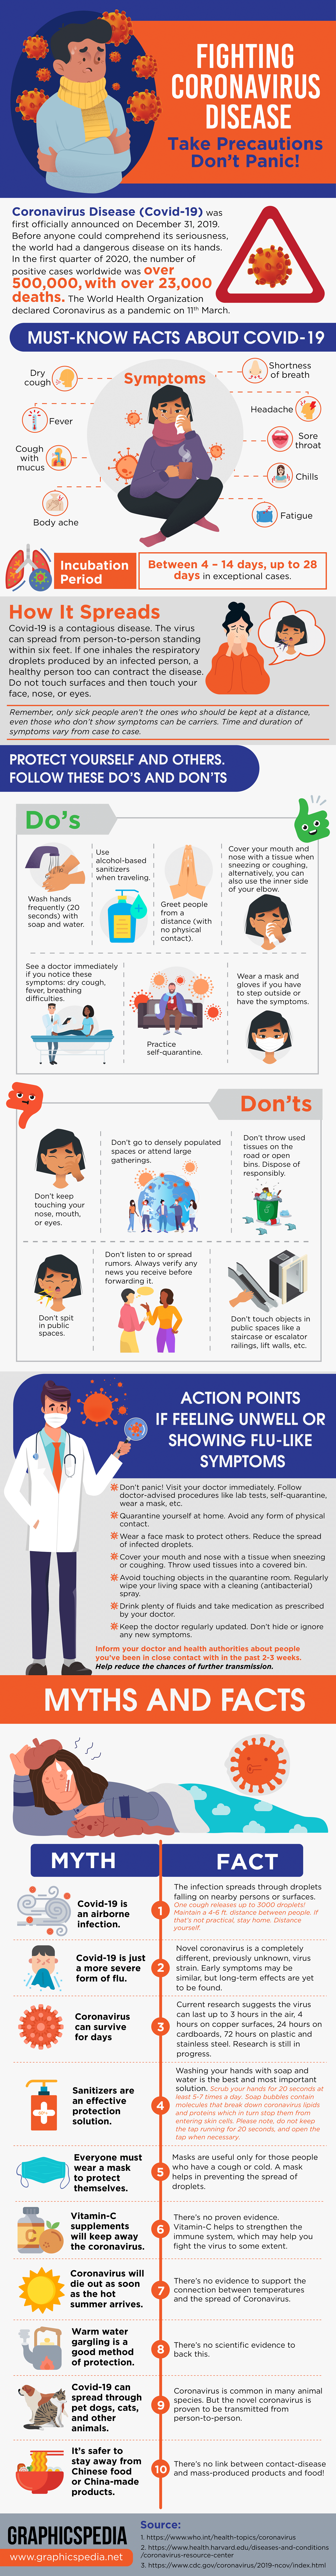 Fighting Corona virus Disease: Take Precautions But Don’t Panic #infographic